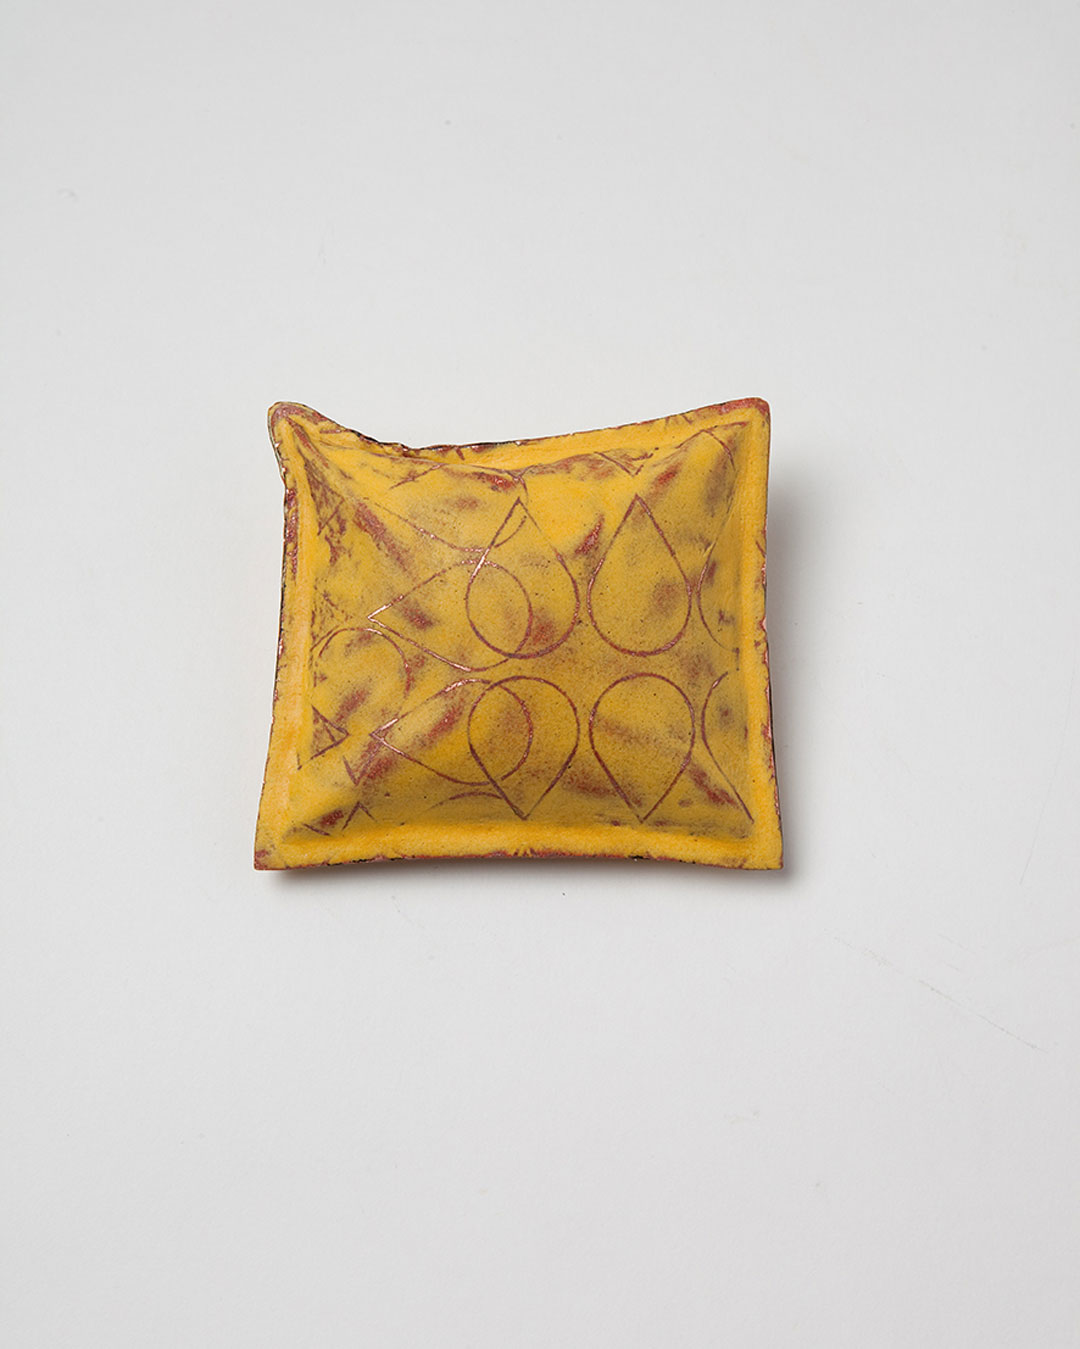 Nicole Beck, Yellow Drops, 2017, brooch; copper, enamel, silver, 95 x 105 x 40 mm, €970